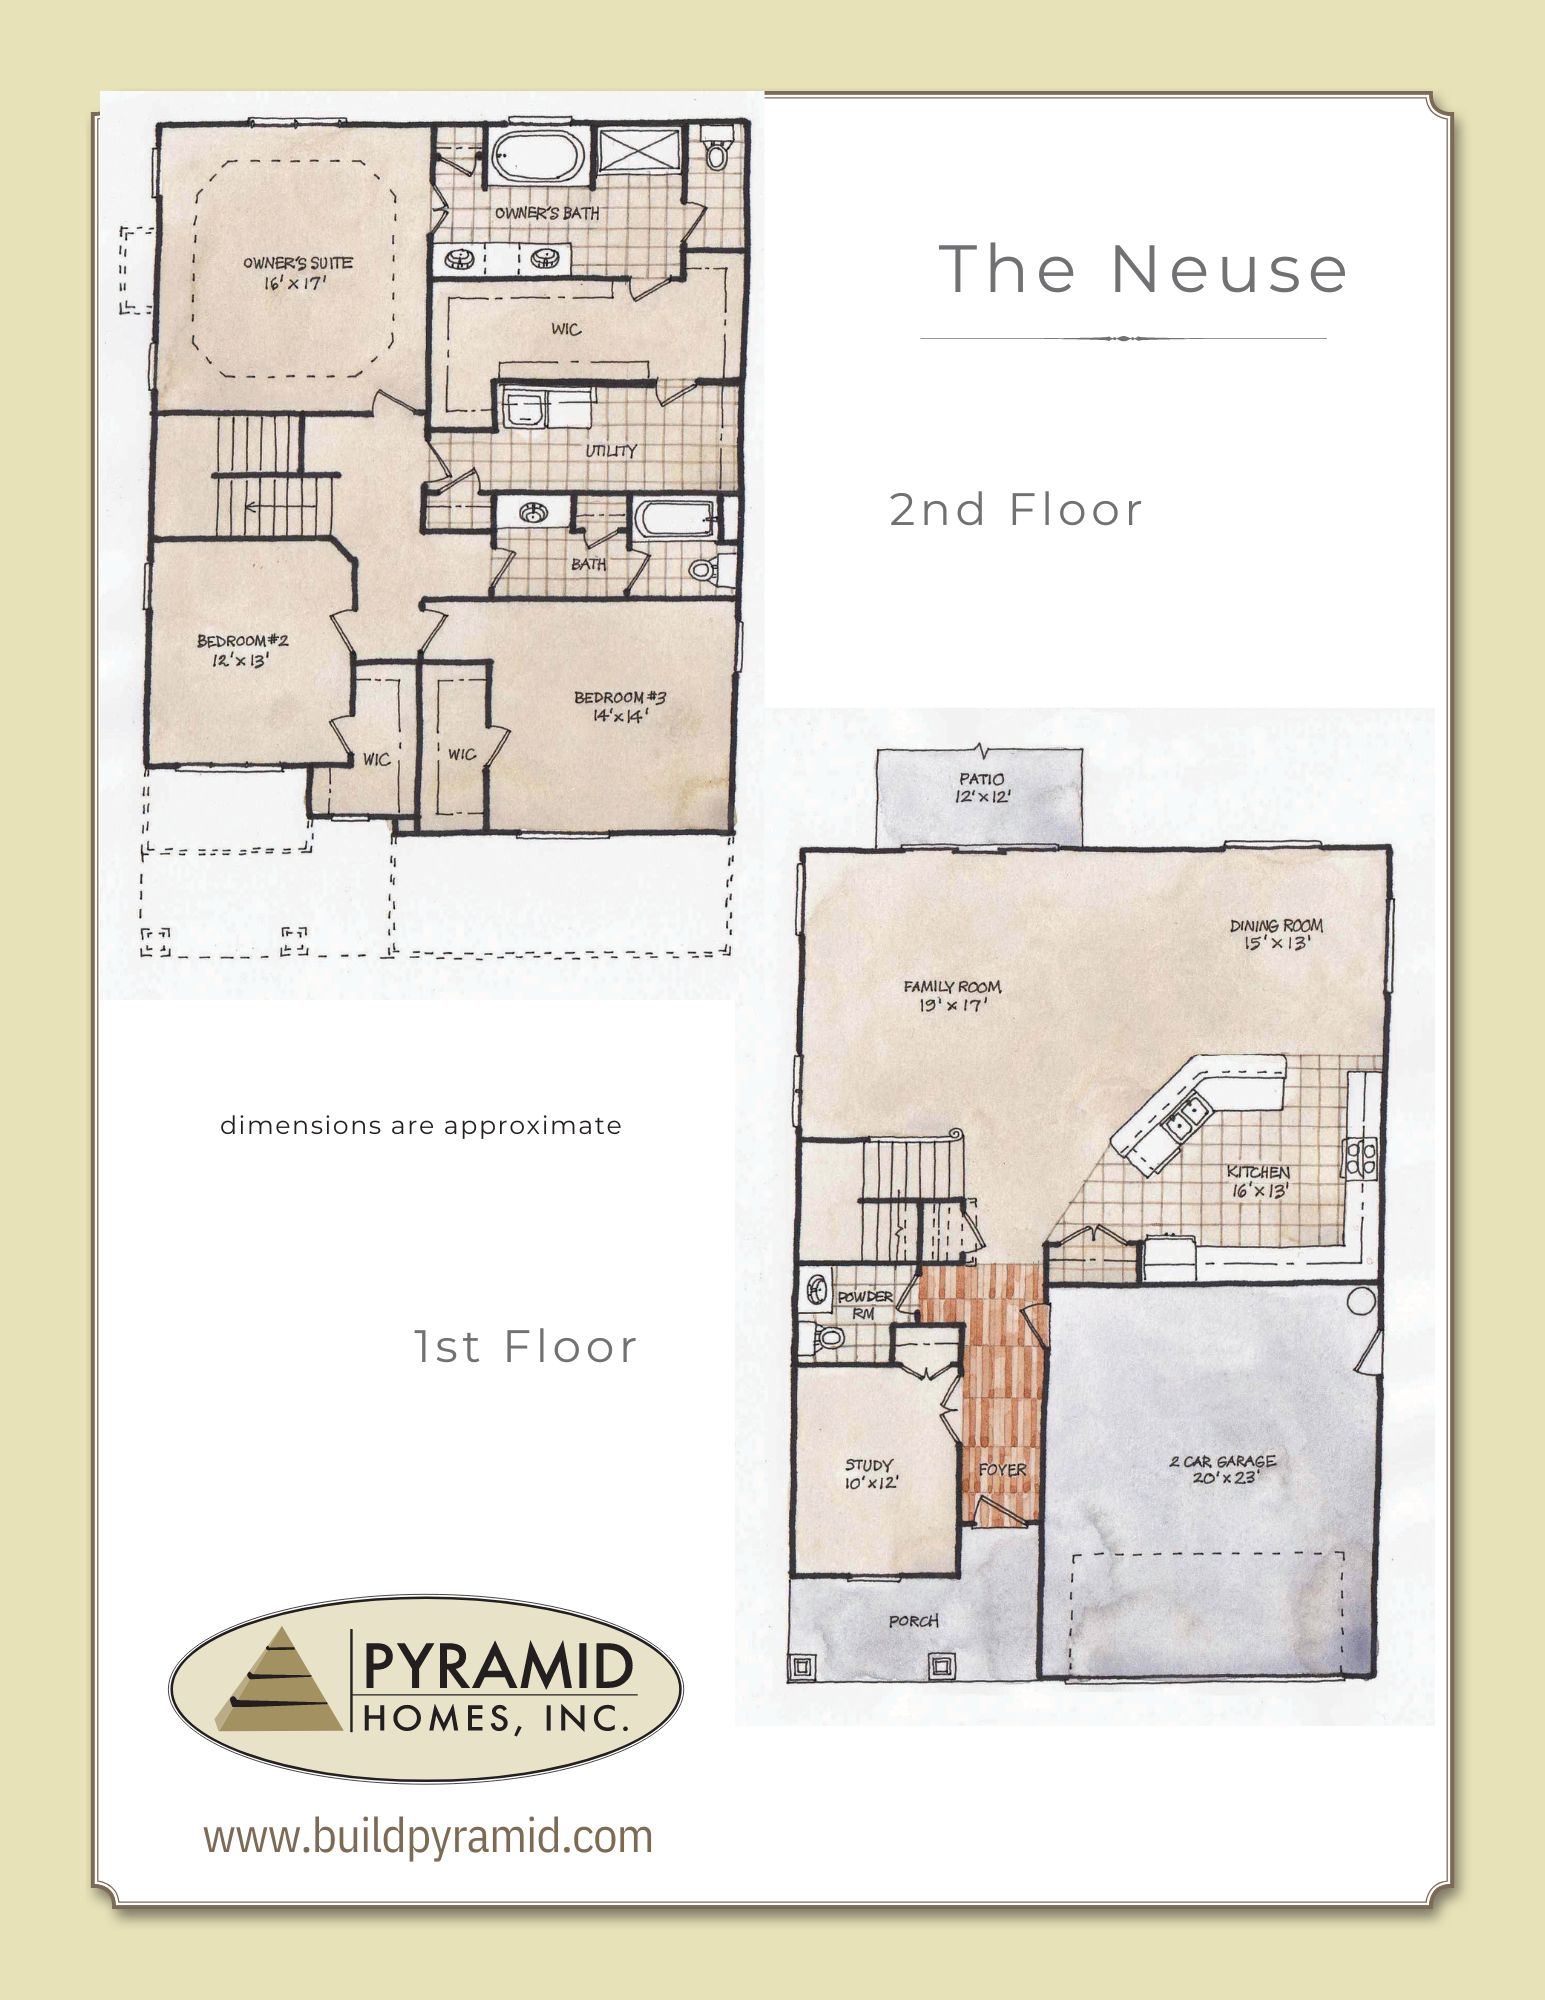 The Neuse floor plan image